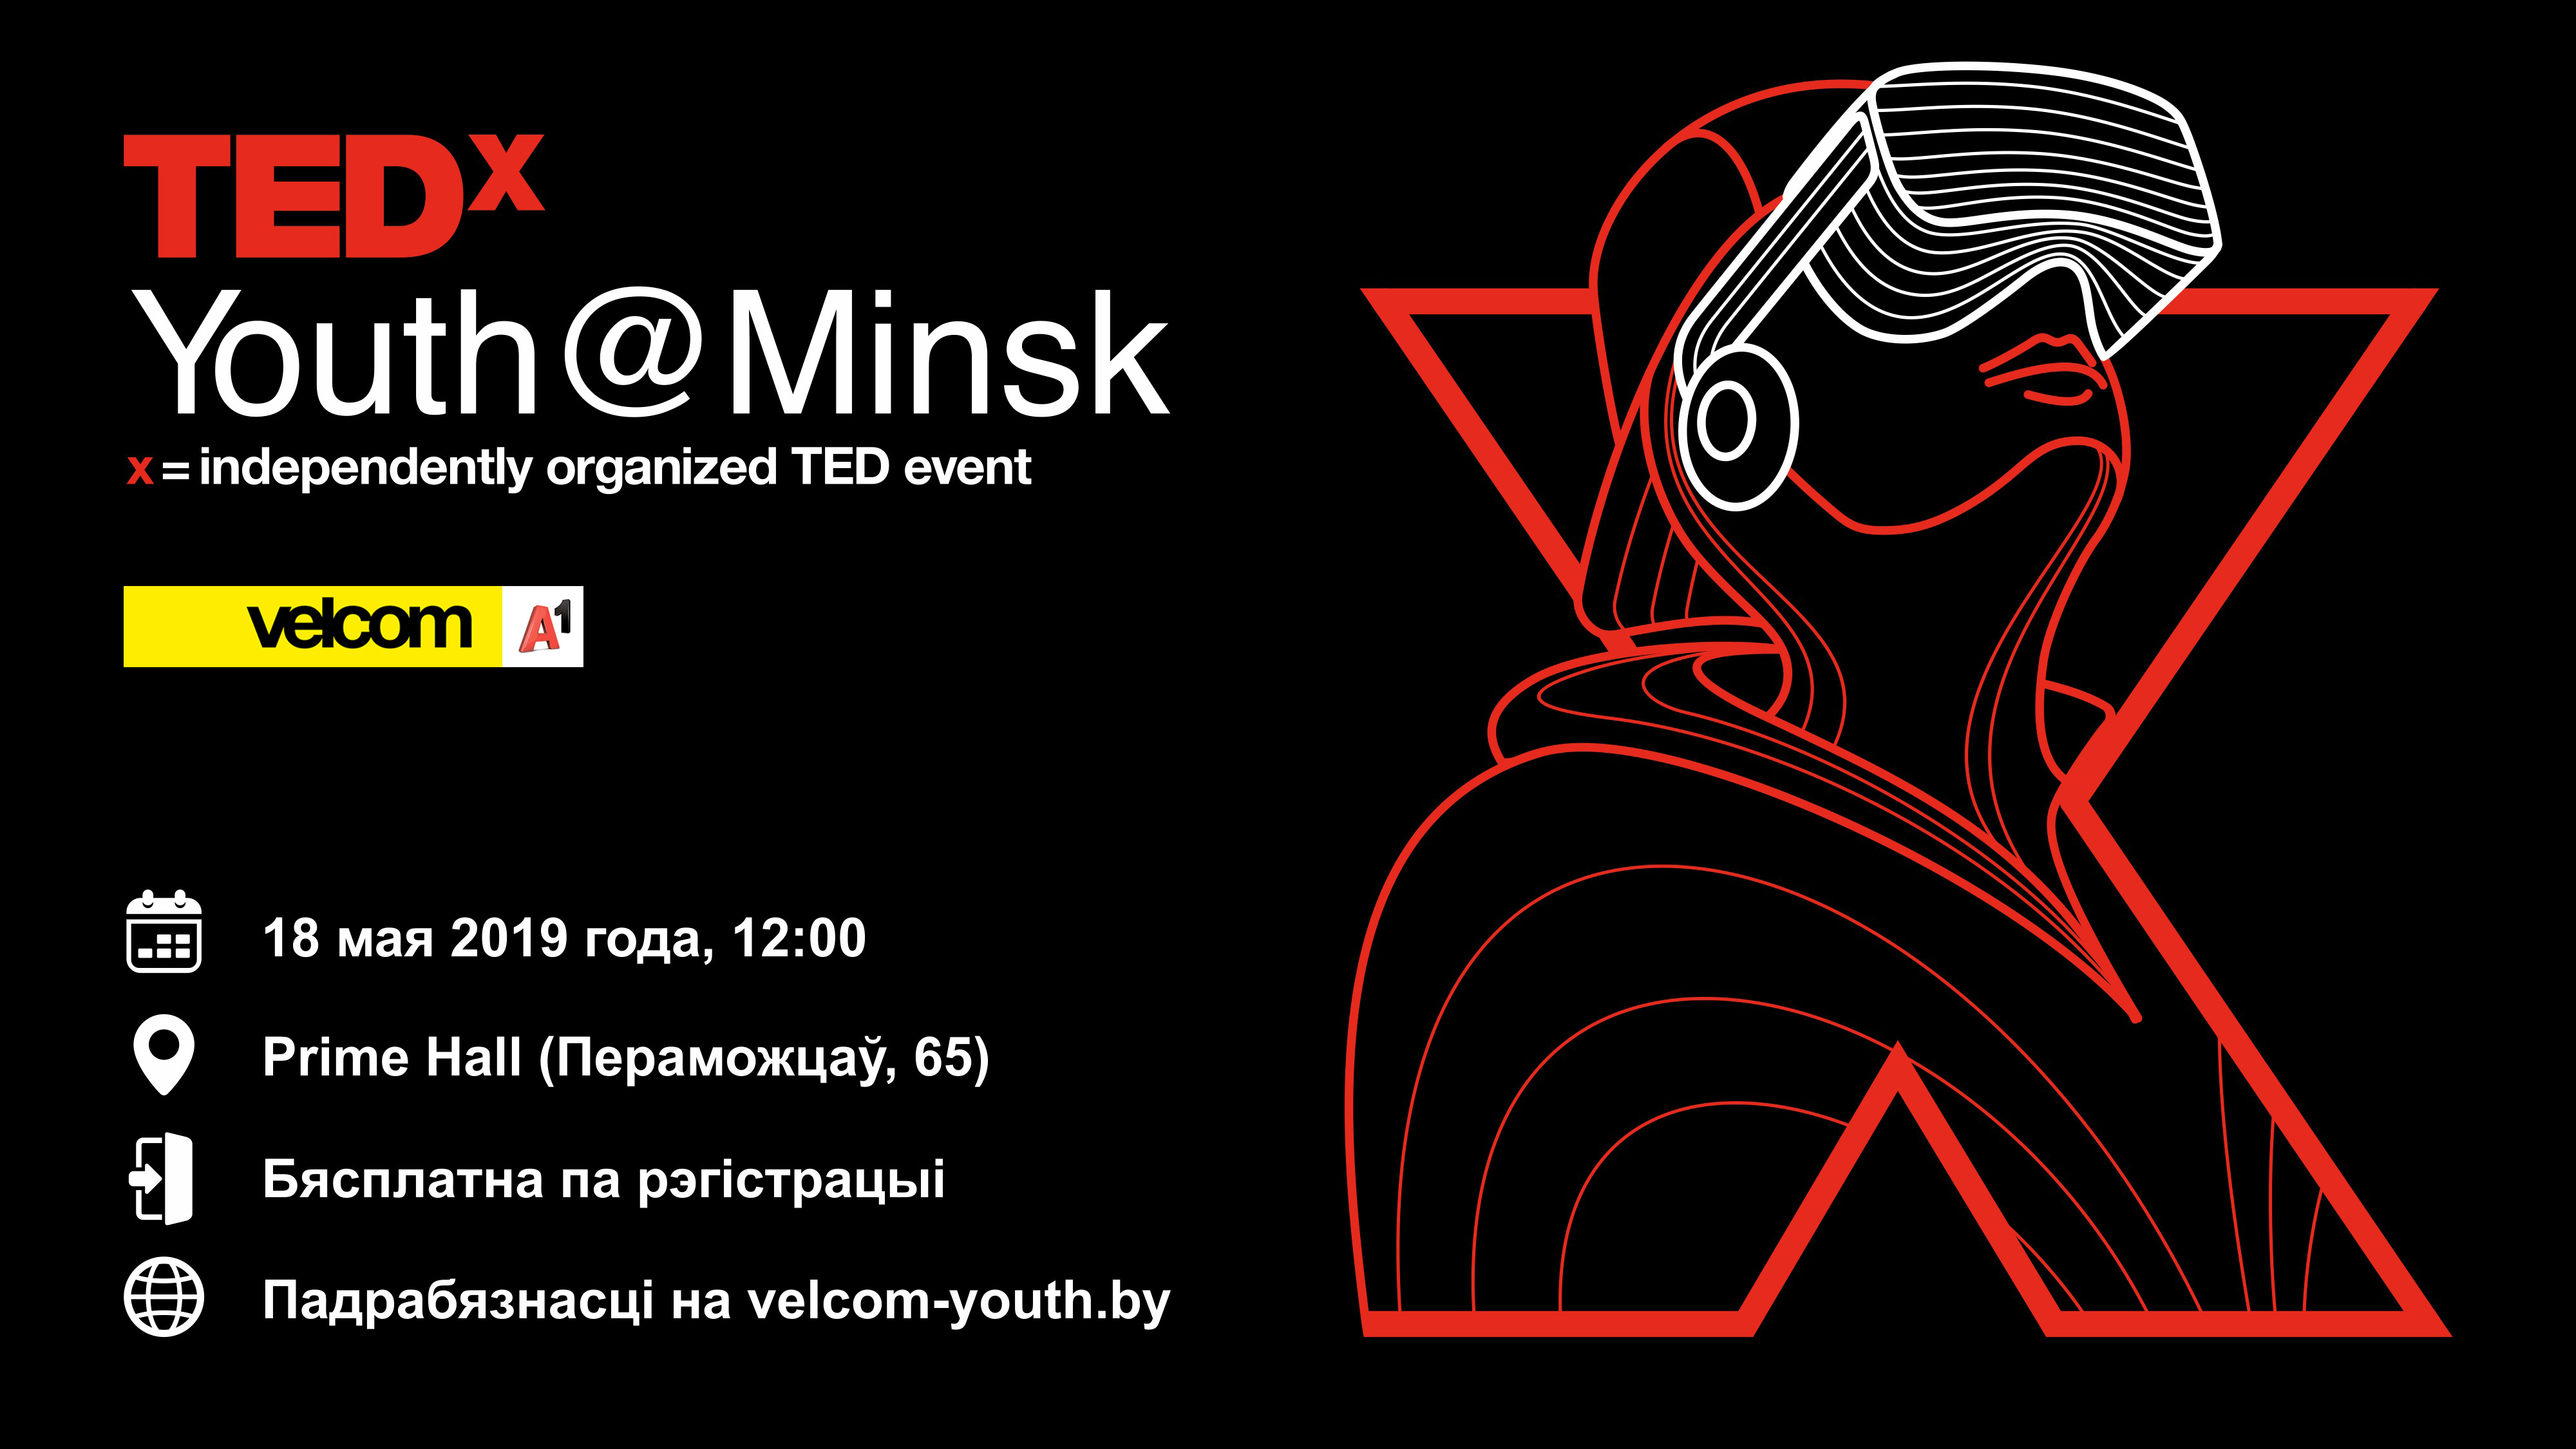 velcom | A1, TEDxYouth@Minsk, TED